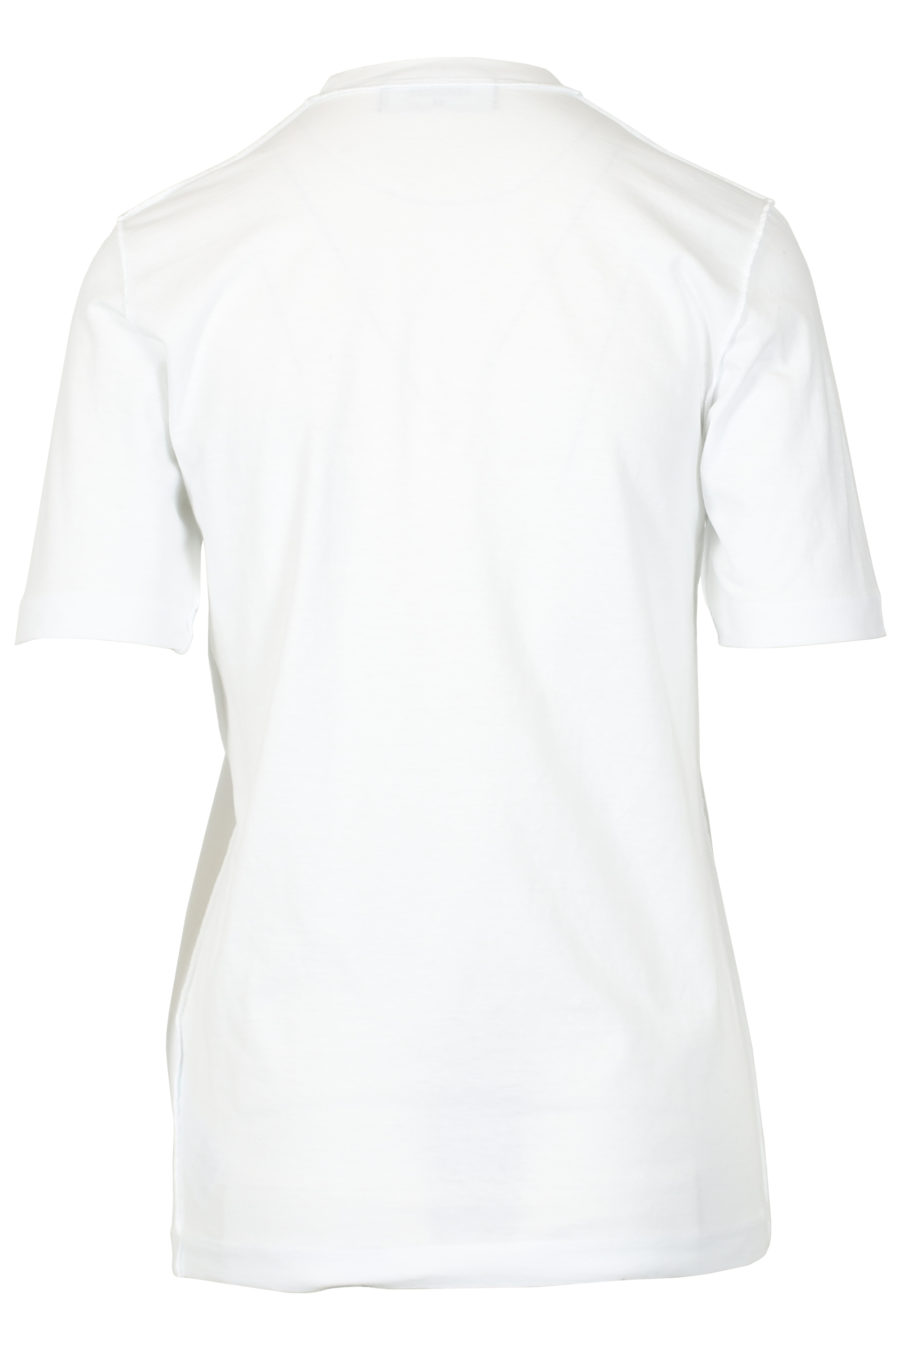 Camiseta de manga corta blanca con tigre - IMG 3271